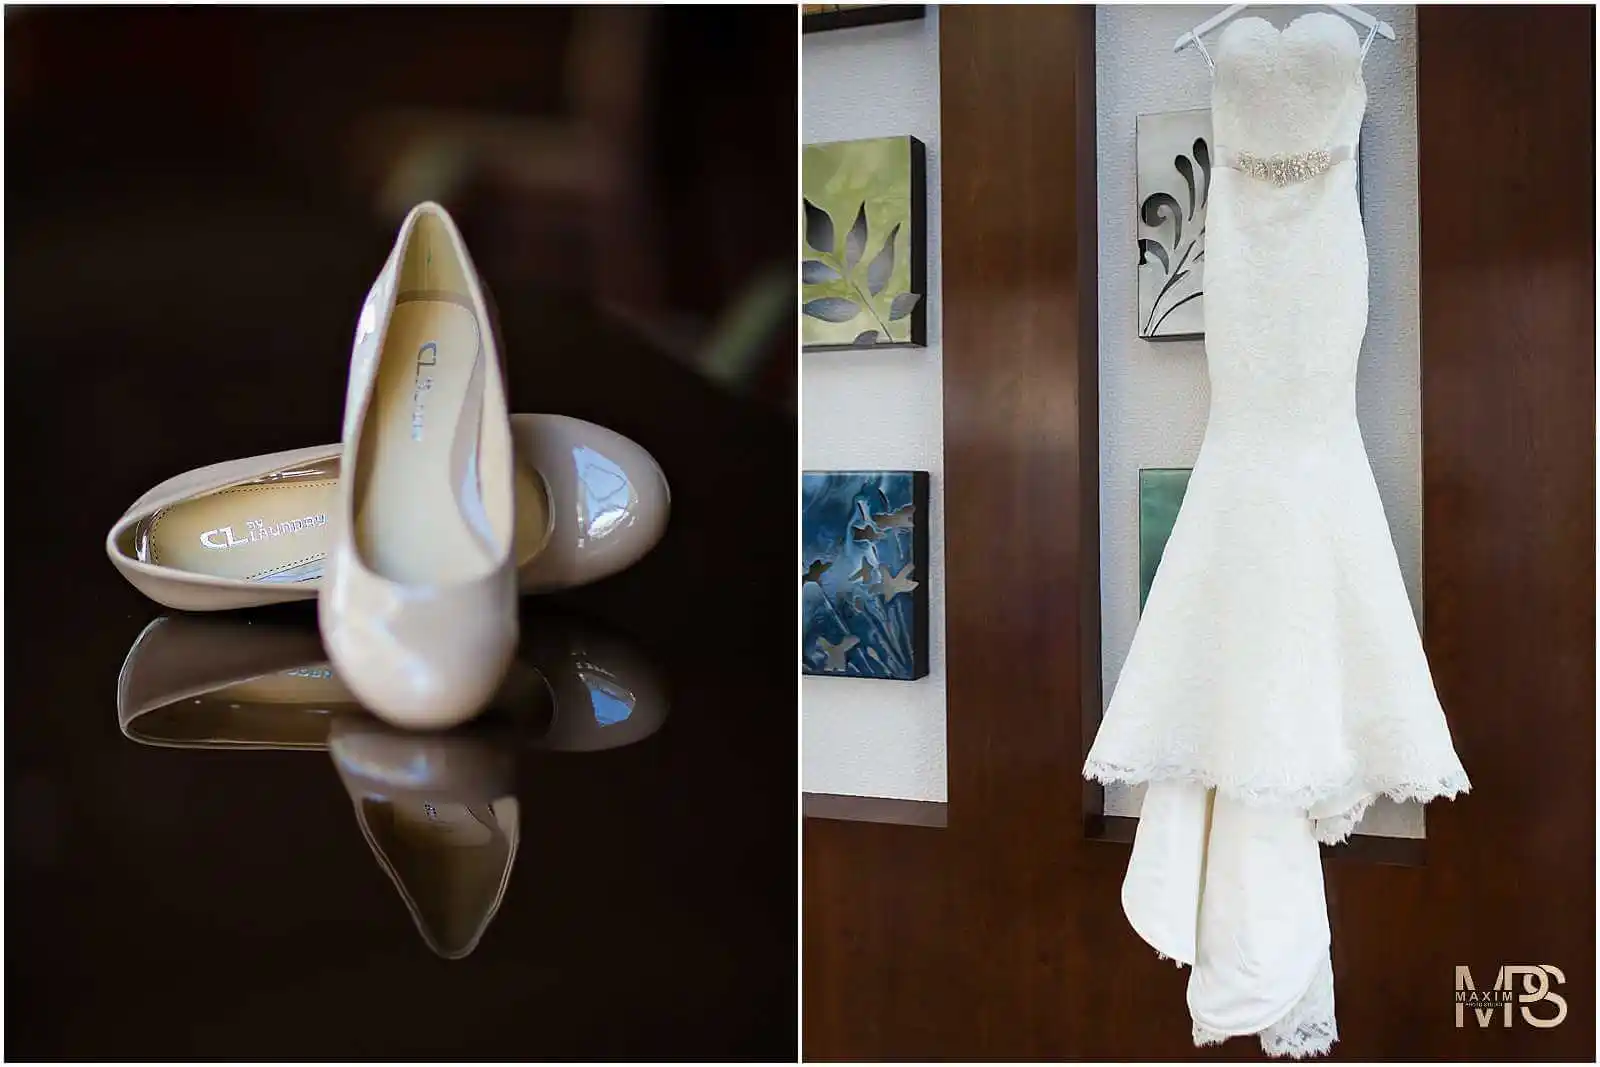 Elegant wedding dress and shoes reflected on shiny surface at Hyatt Regency Cincinnati.